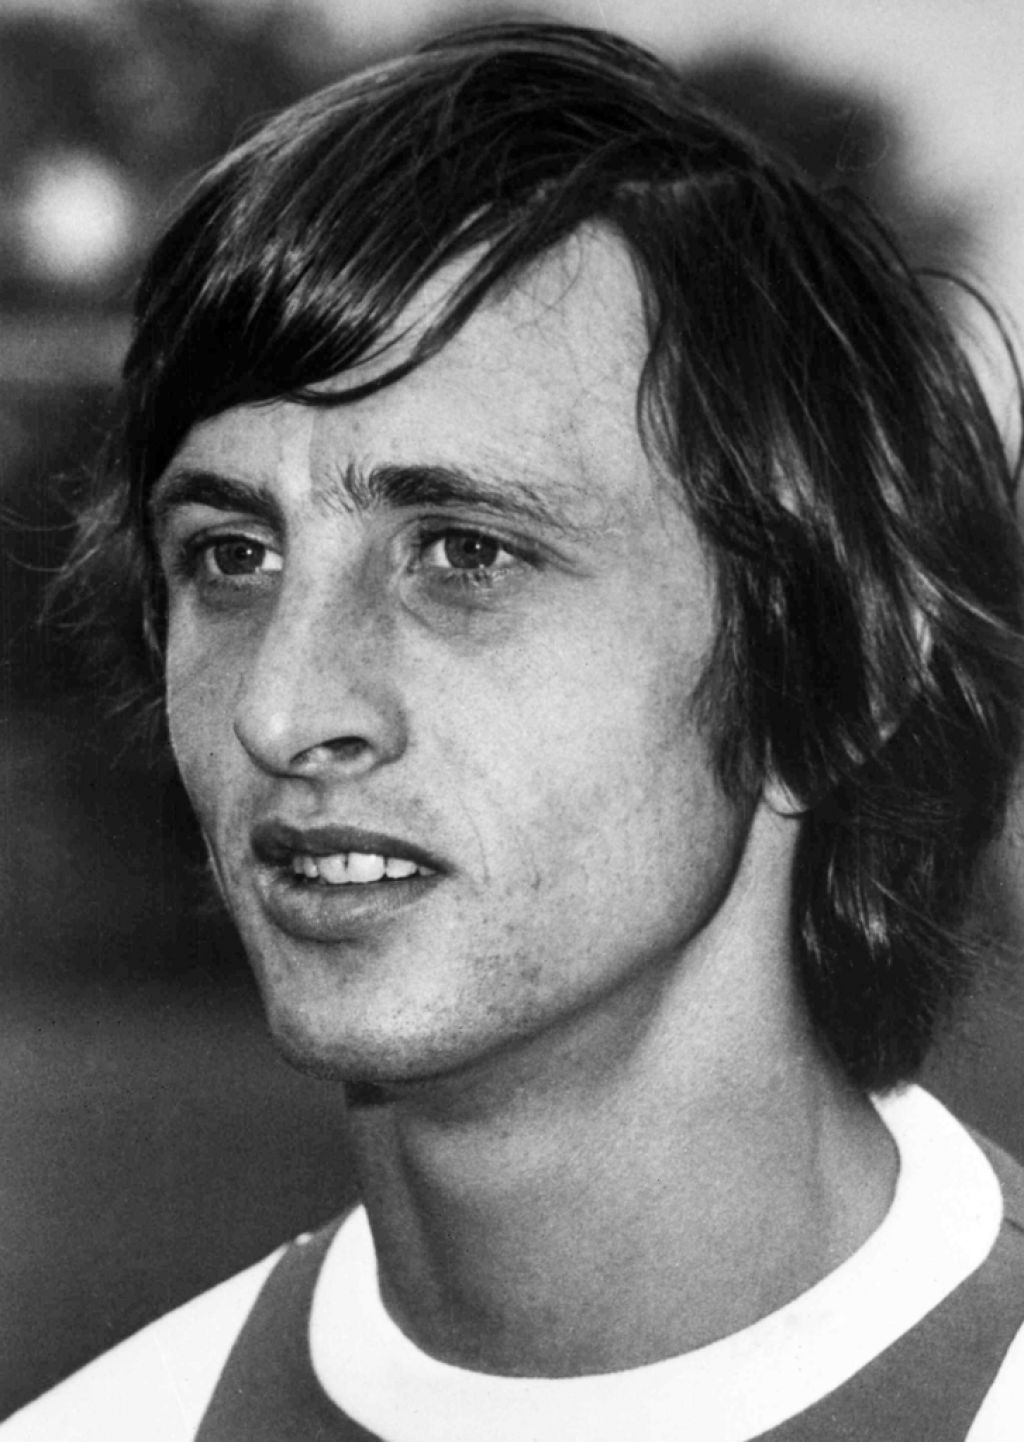 Umrl legendarni Johan Cruyff